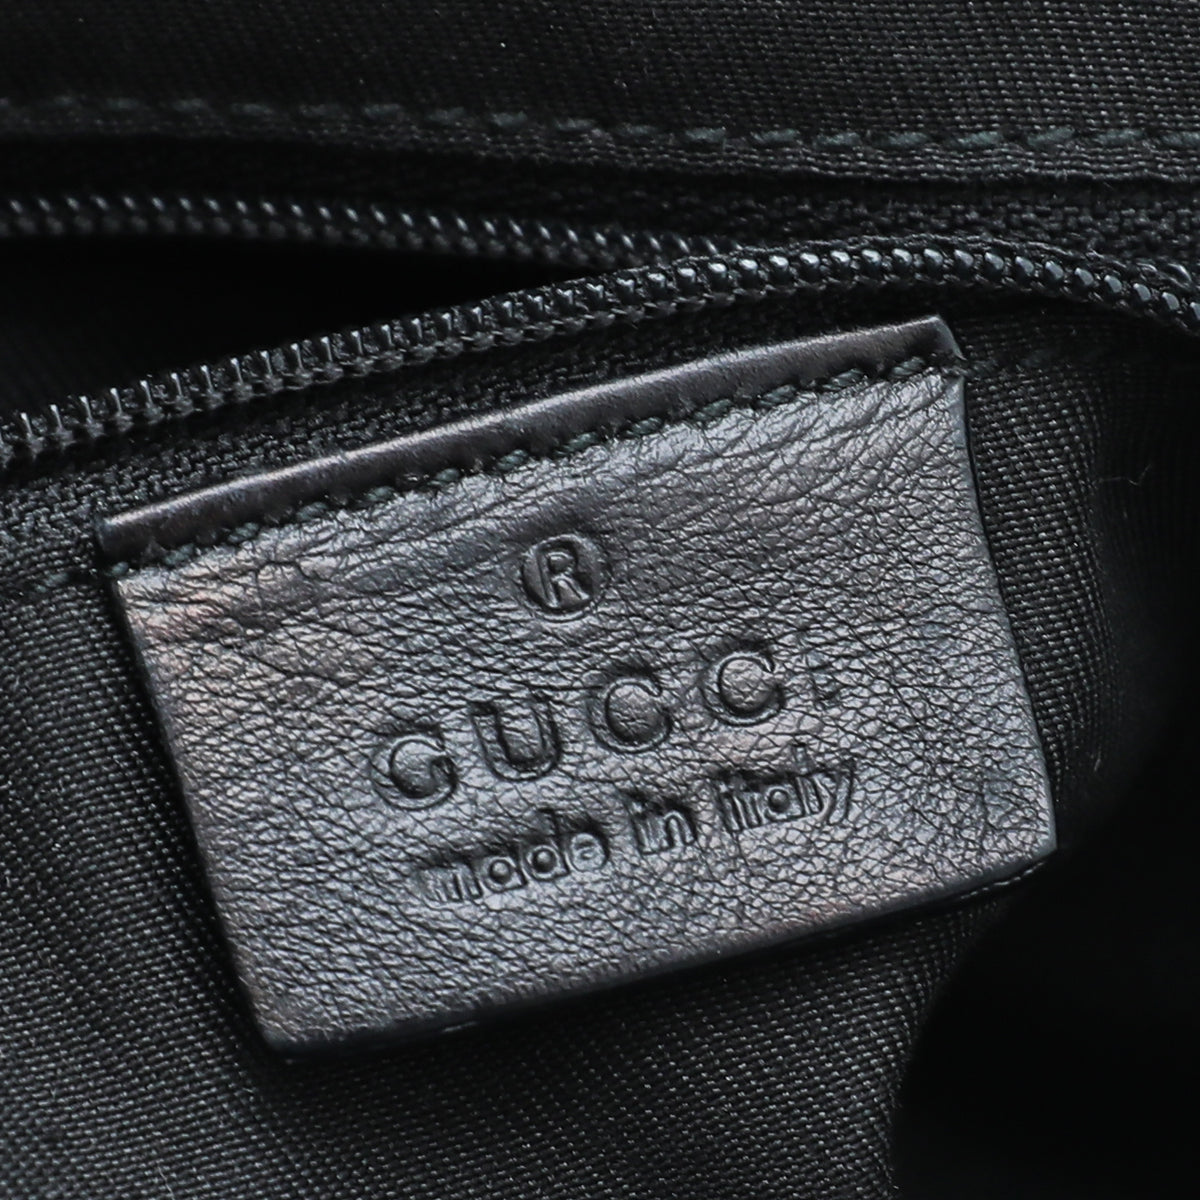 Gucci Black Sukey Large Tote Bag